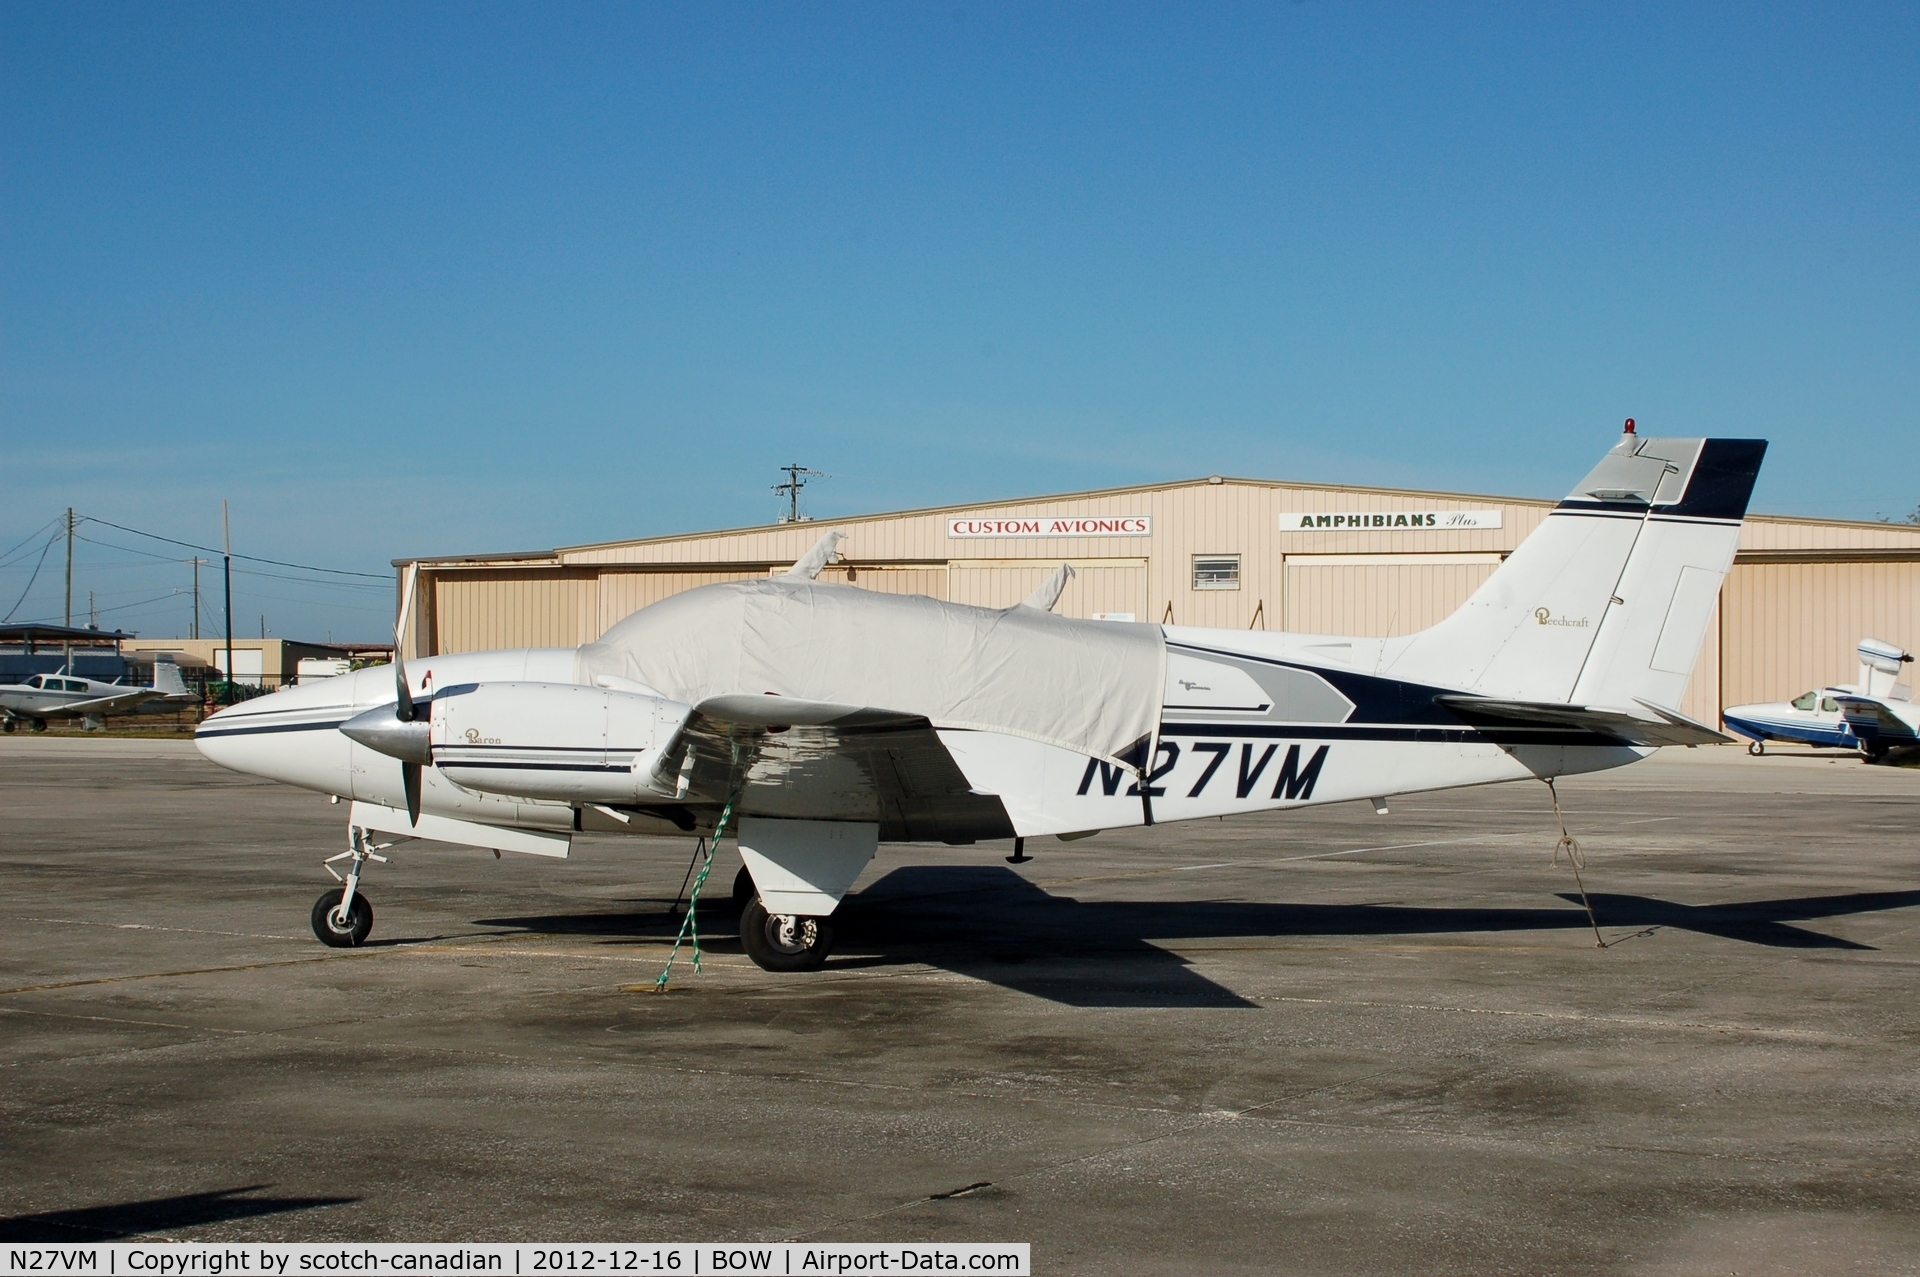 N27VM, 1969 Beech D55 Baron C/N TE-698, 1969 Beech D55, N27VM, at Bartow Municipal Airport, Bartow, FL 